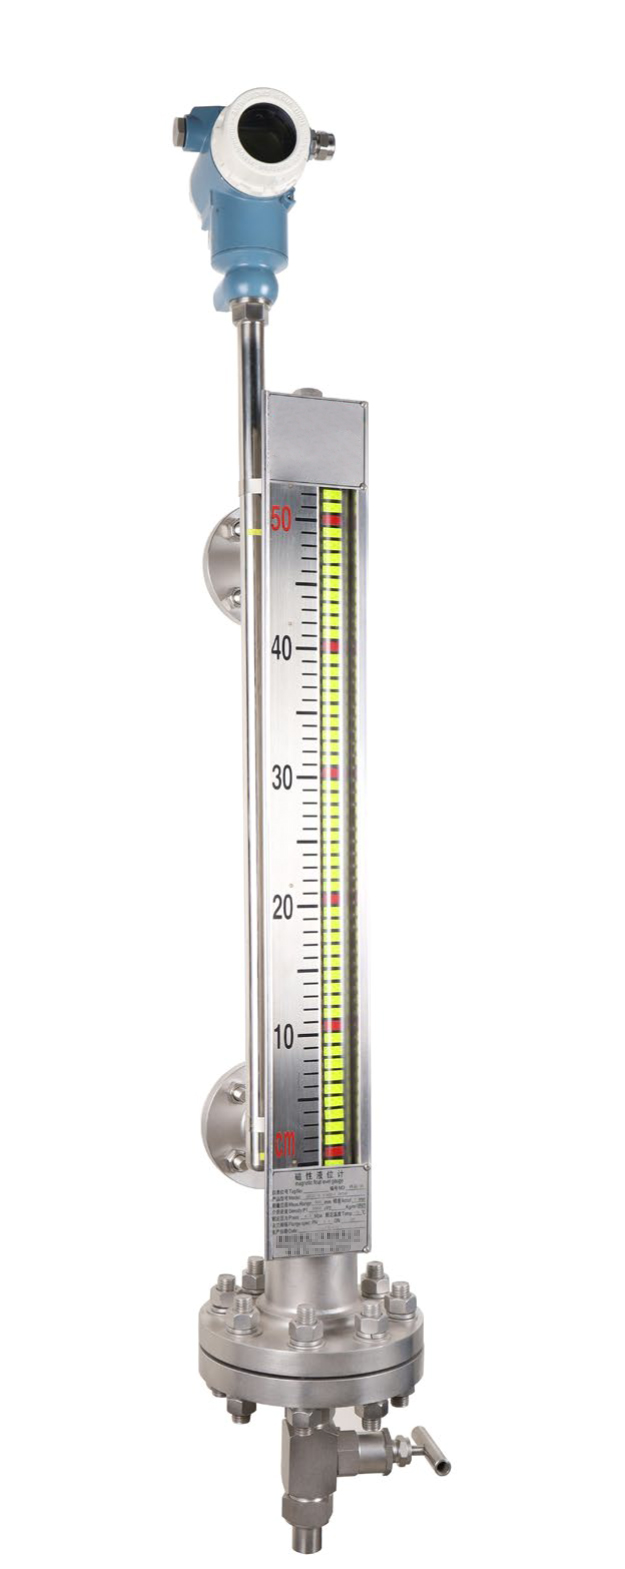 Kaidi Sensors water level gauge supply for work